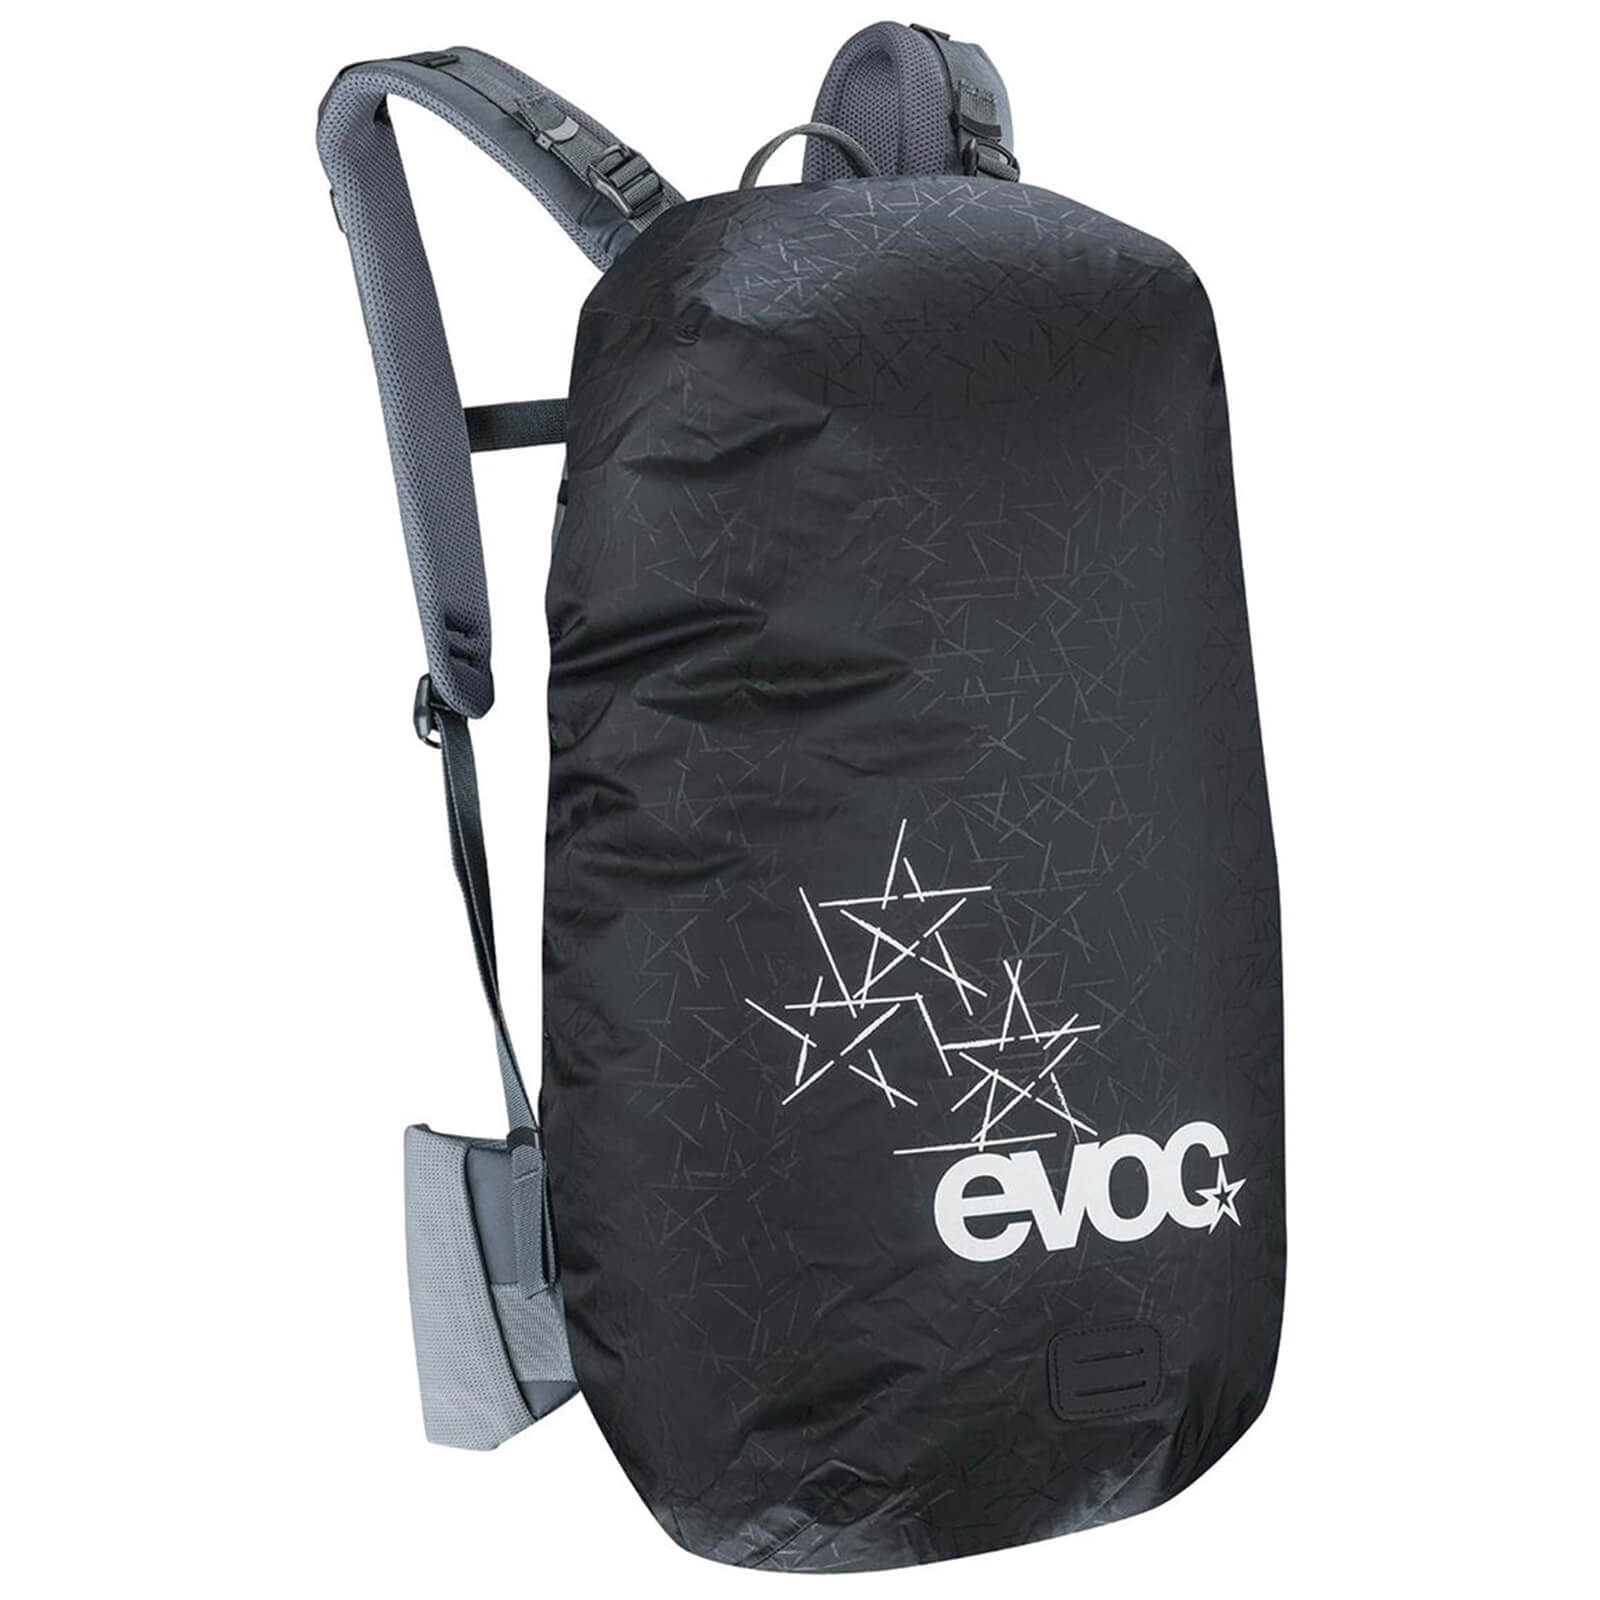 Evoc Large Raincover Sleeve For Backpack - Steel